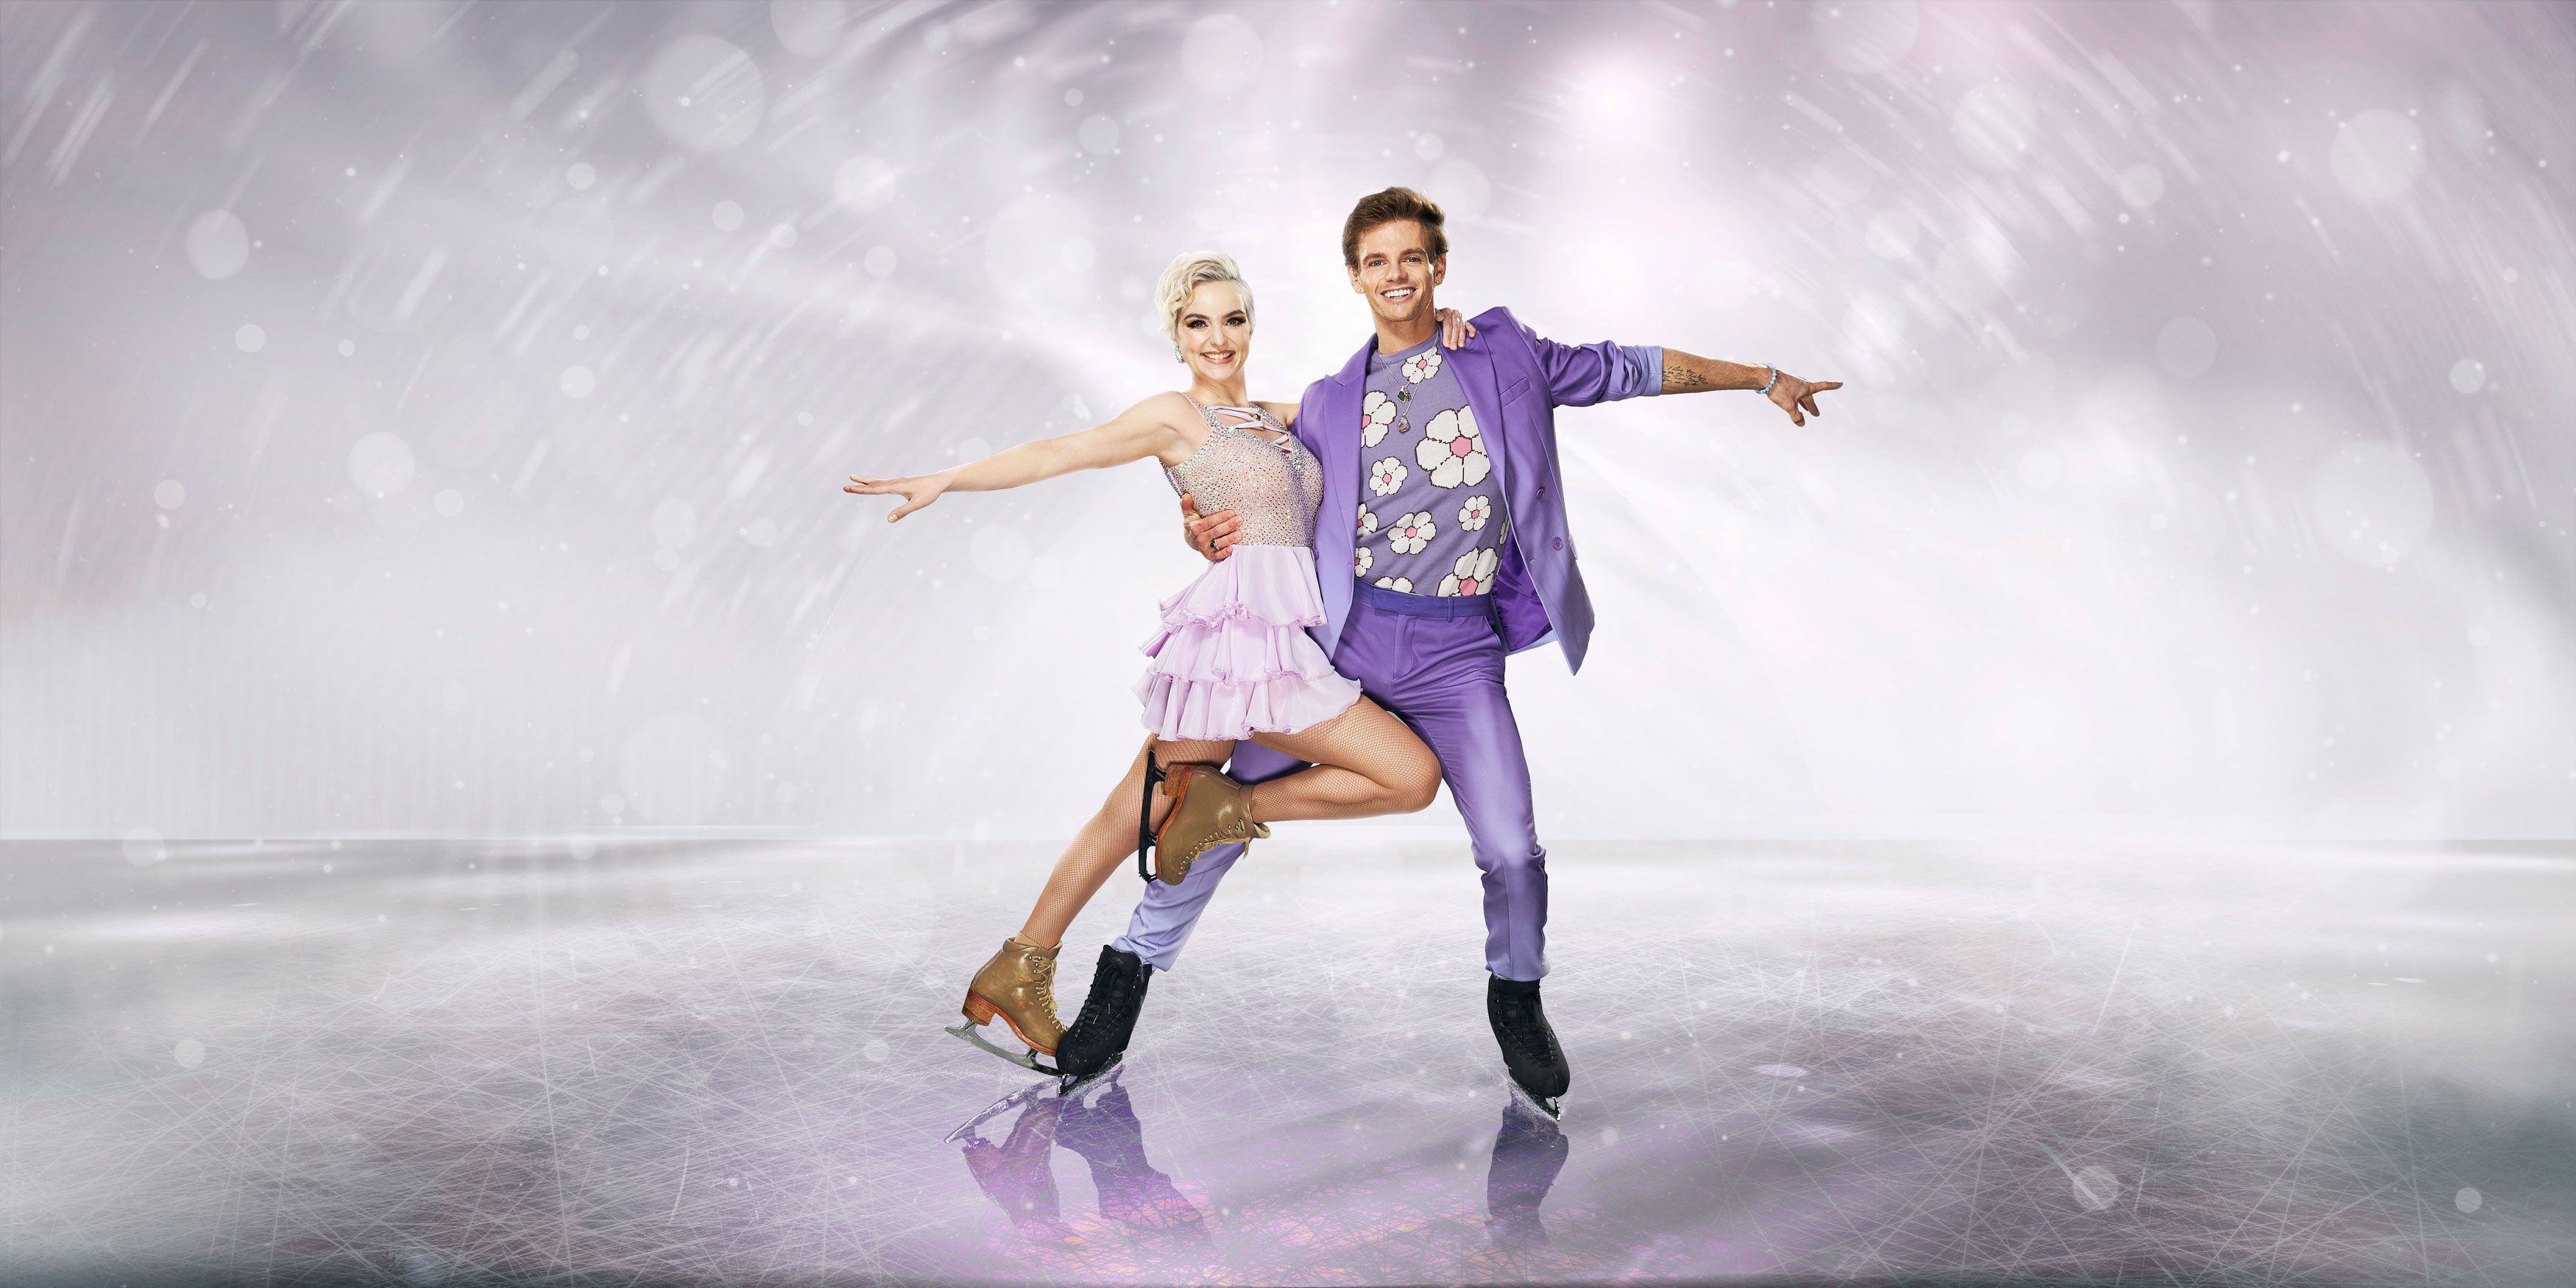 Estée Lauder is Dancing On Ice's first beauty partner